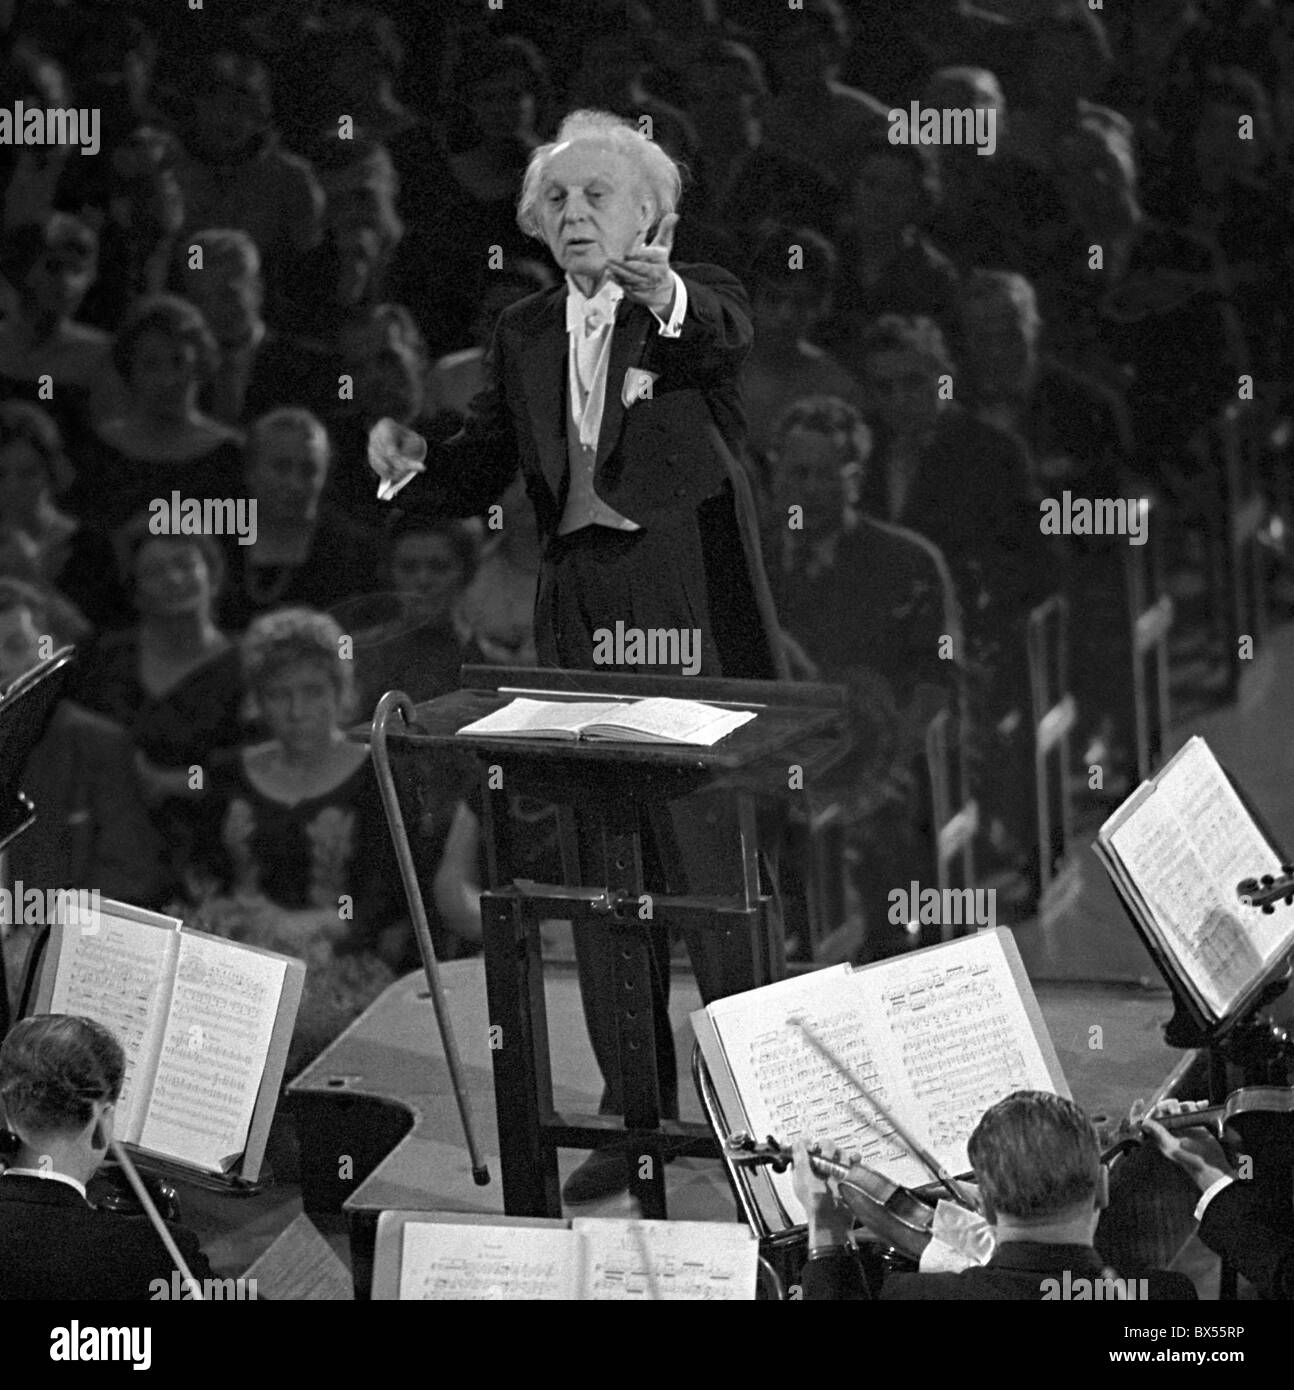 File:Leopold Stokowski - Carnegie Hall 1947 (09) wmplayer 2013-04-16.jpg -  Wikimedia Commons